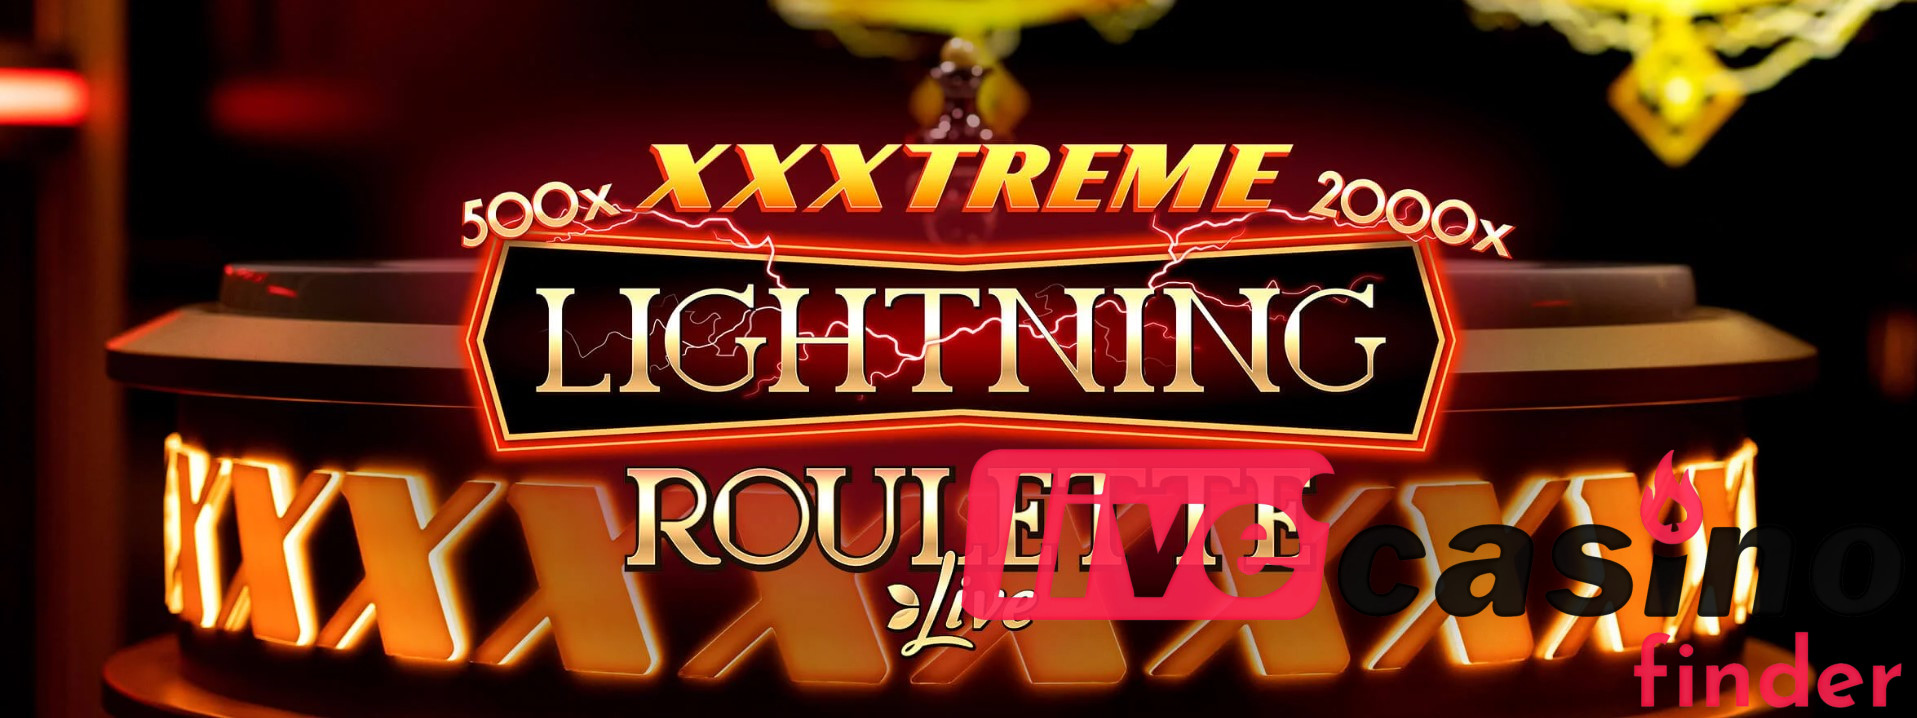 Live XXXTreme Lightning Roulette-spel.